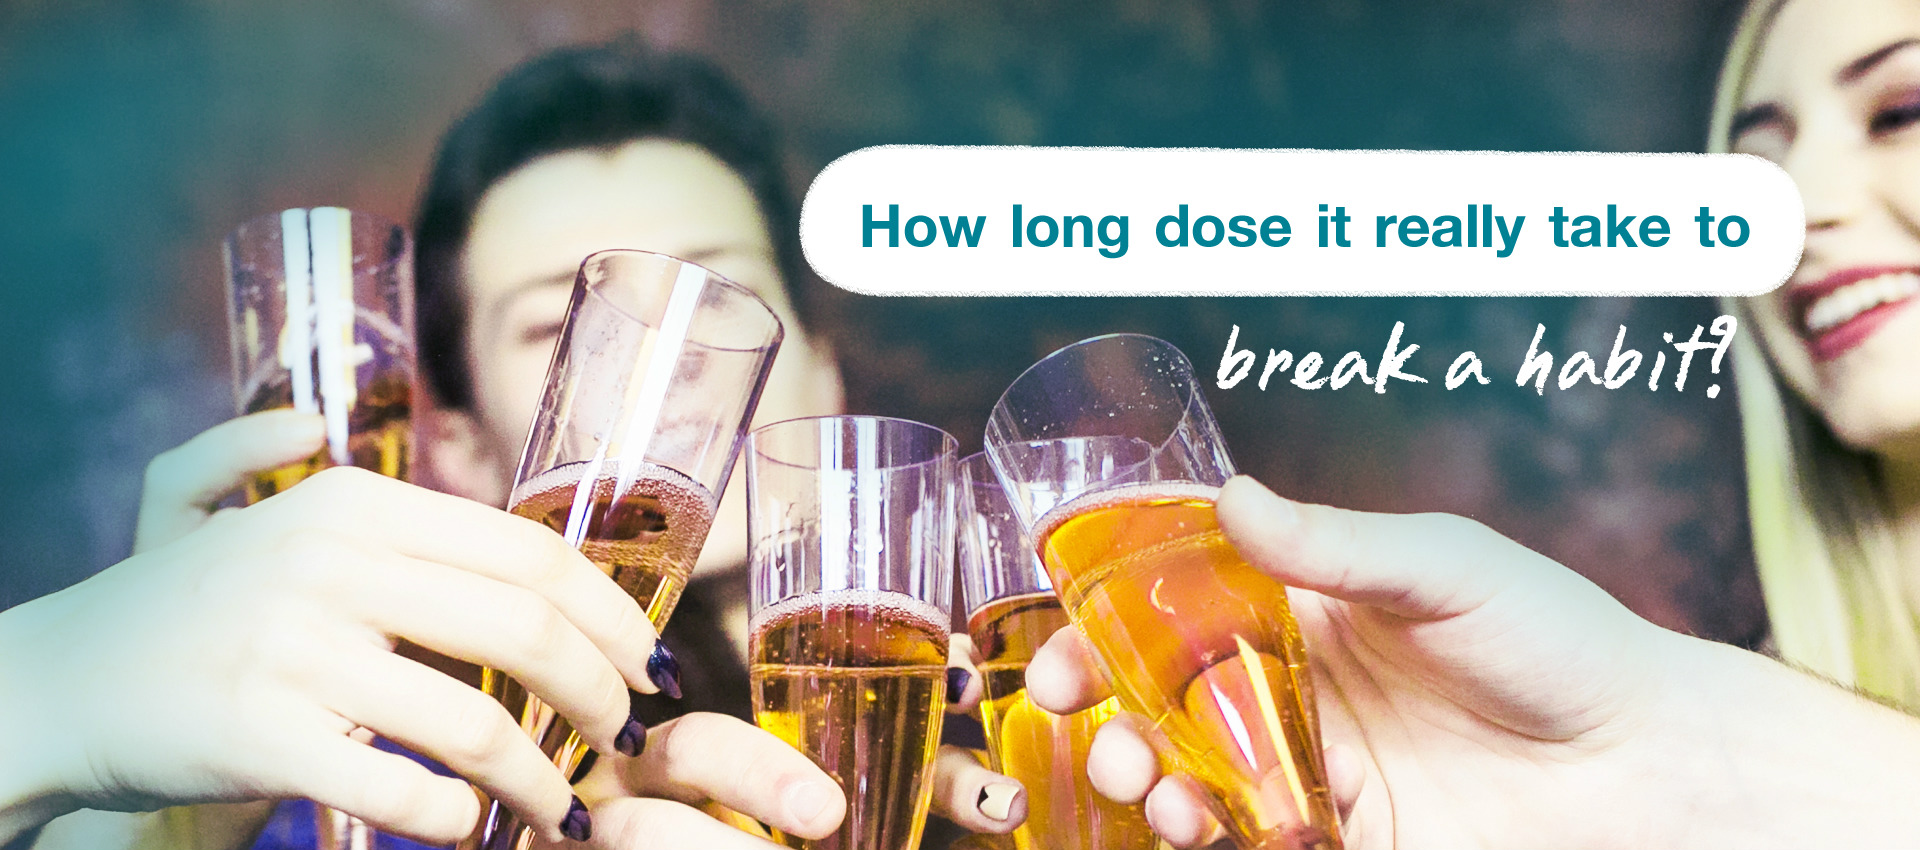 How long does it really take to break a habit?